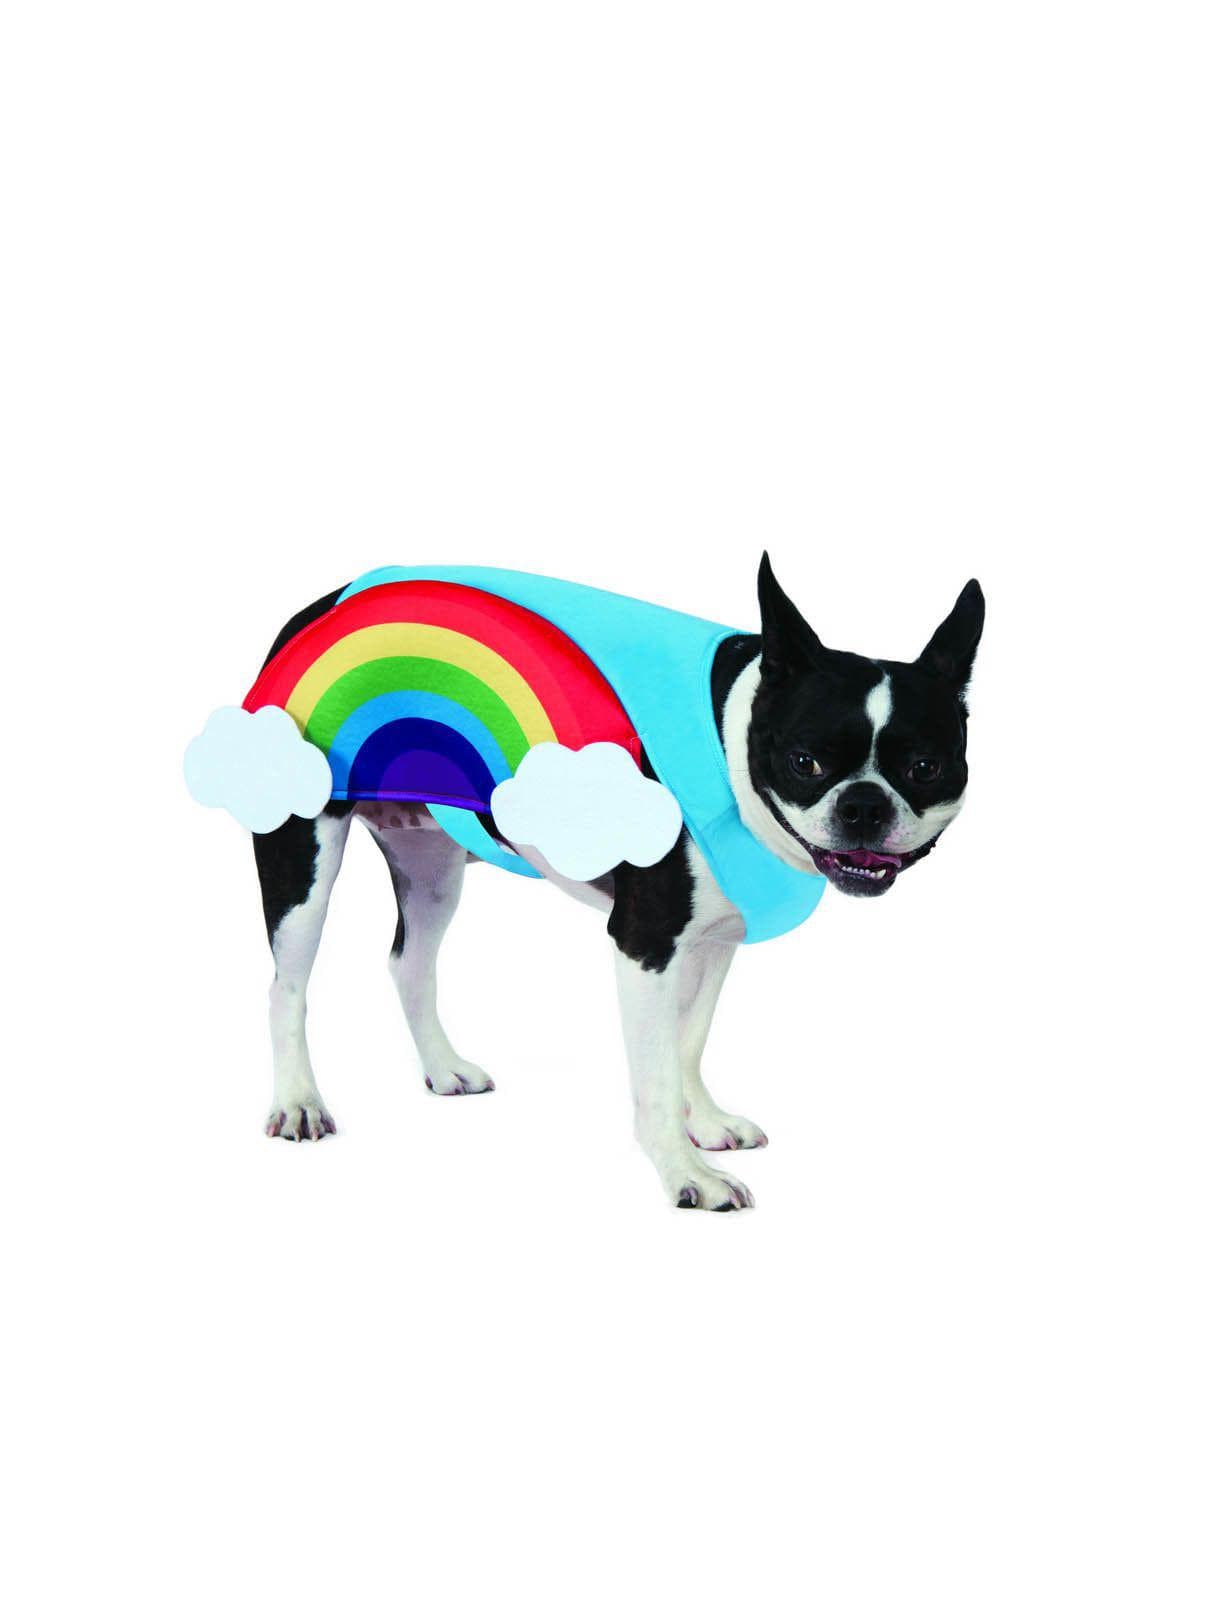 Pet Rainbow Costume - costumes.com